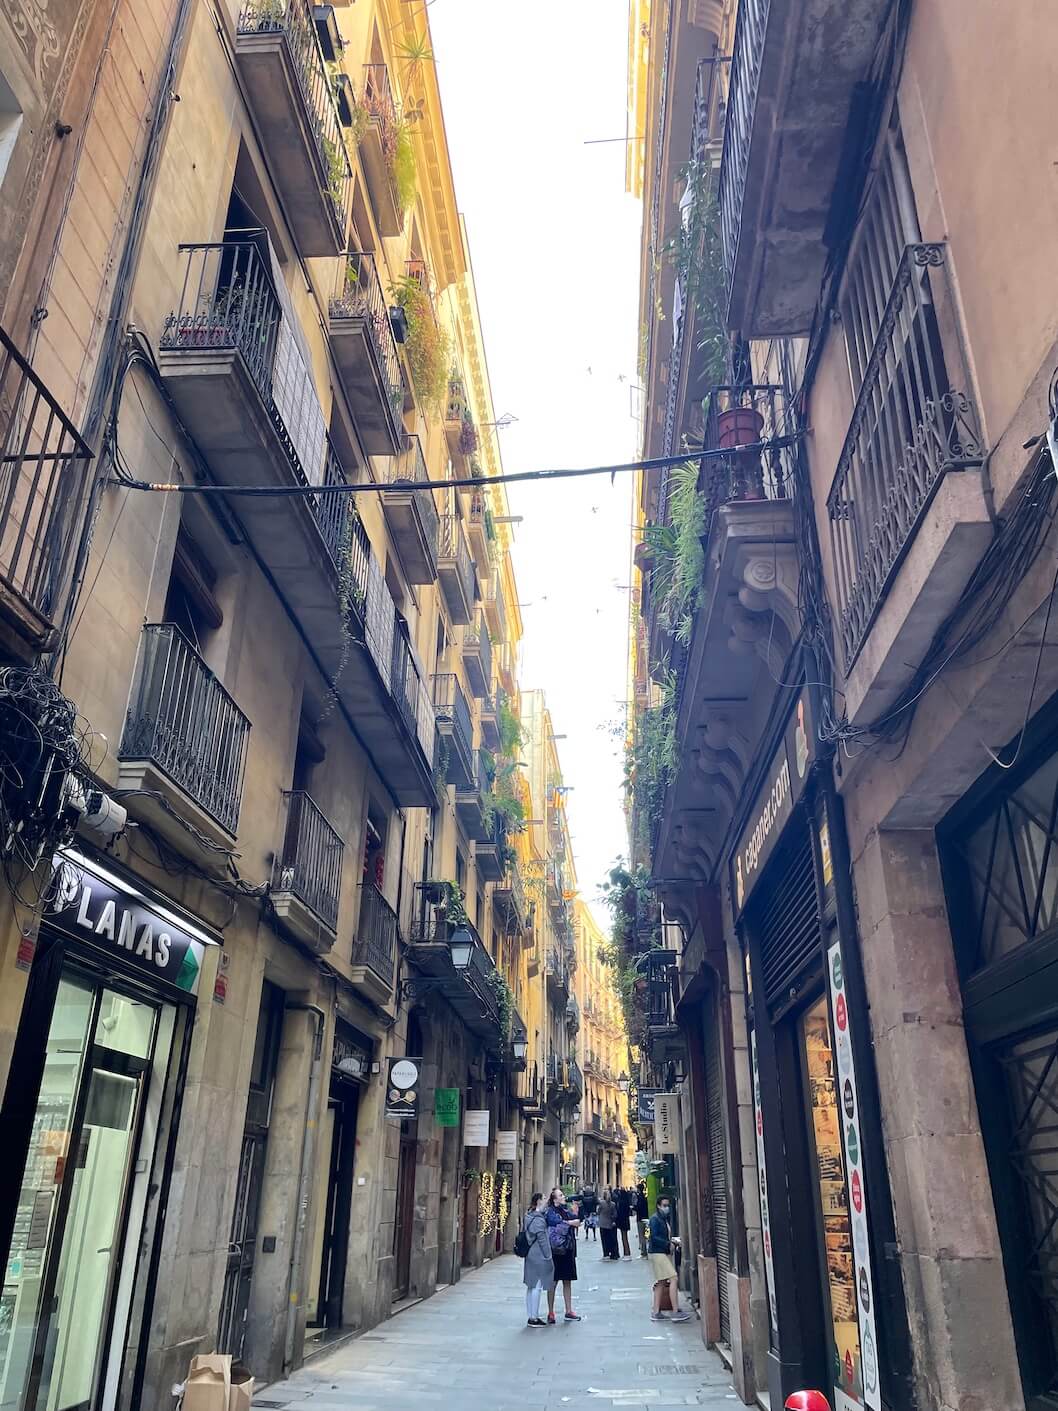 narrow pedestrianised streets of Barcelona 